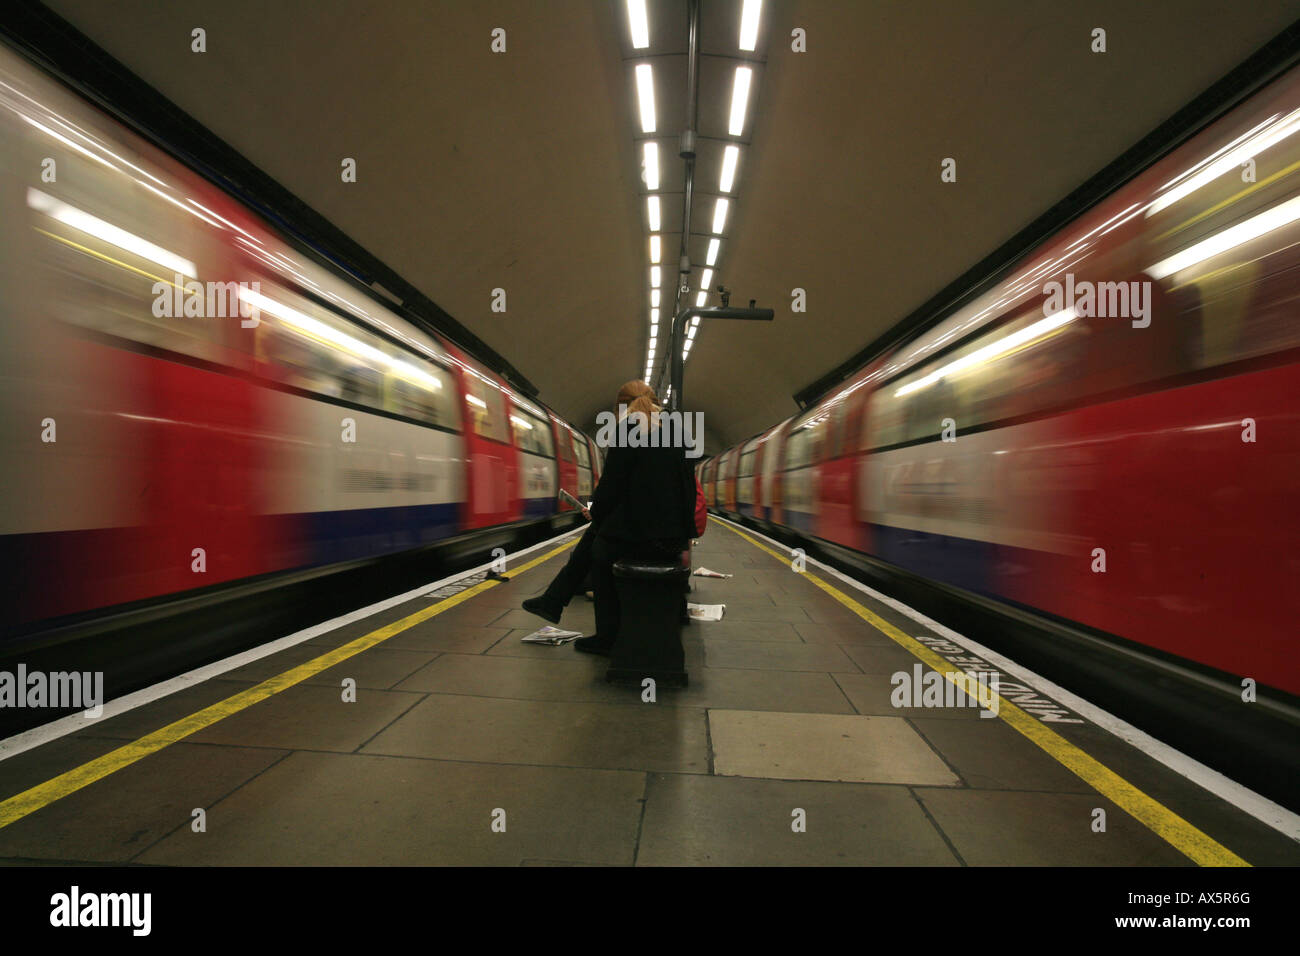 Departing trains and waiting passengers at Clapham South underground station, London, England, UK, Europe Stock Photo